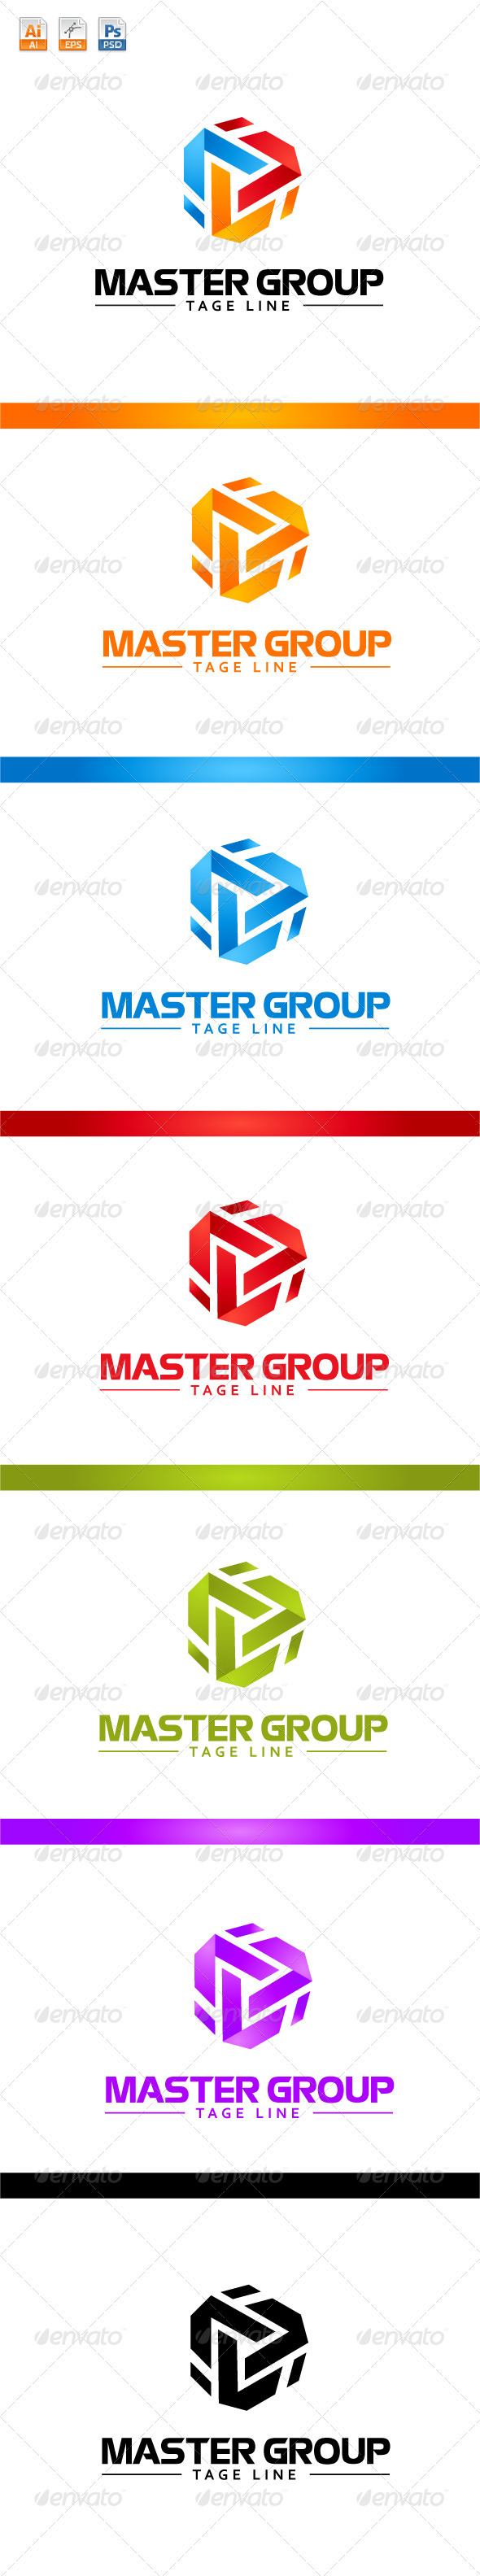 Master Group Logo